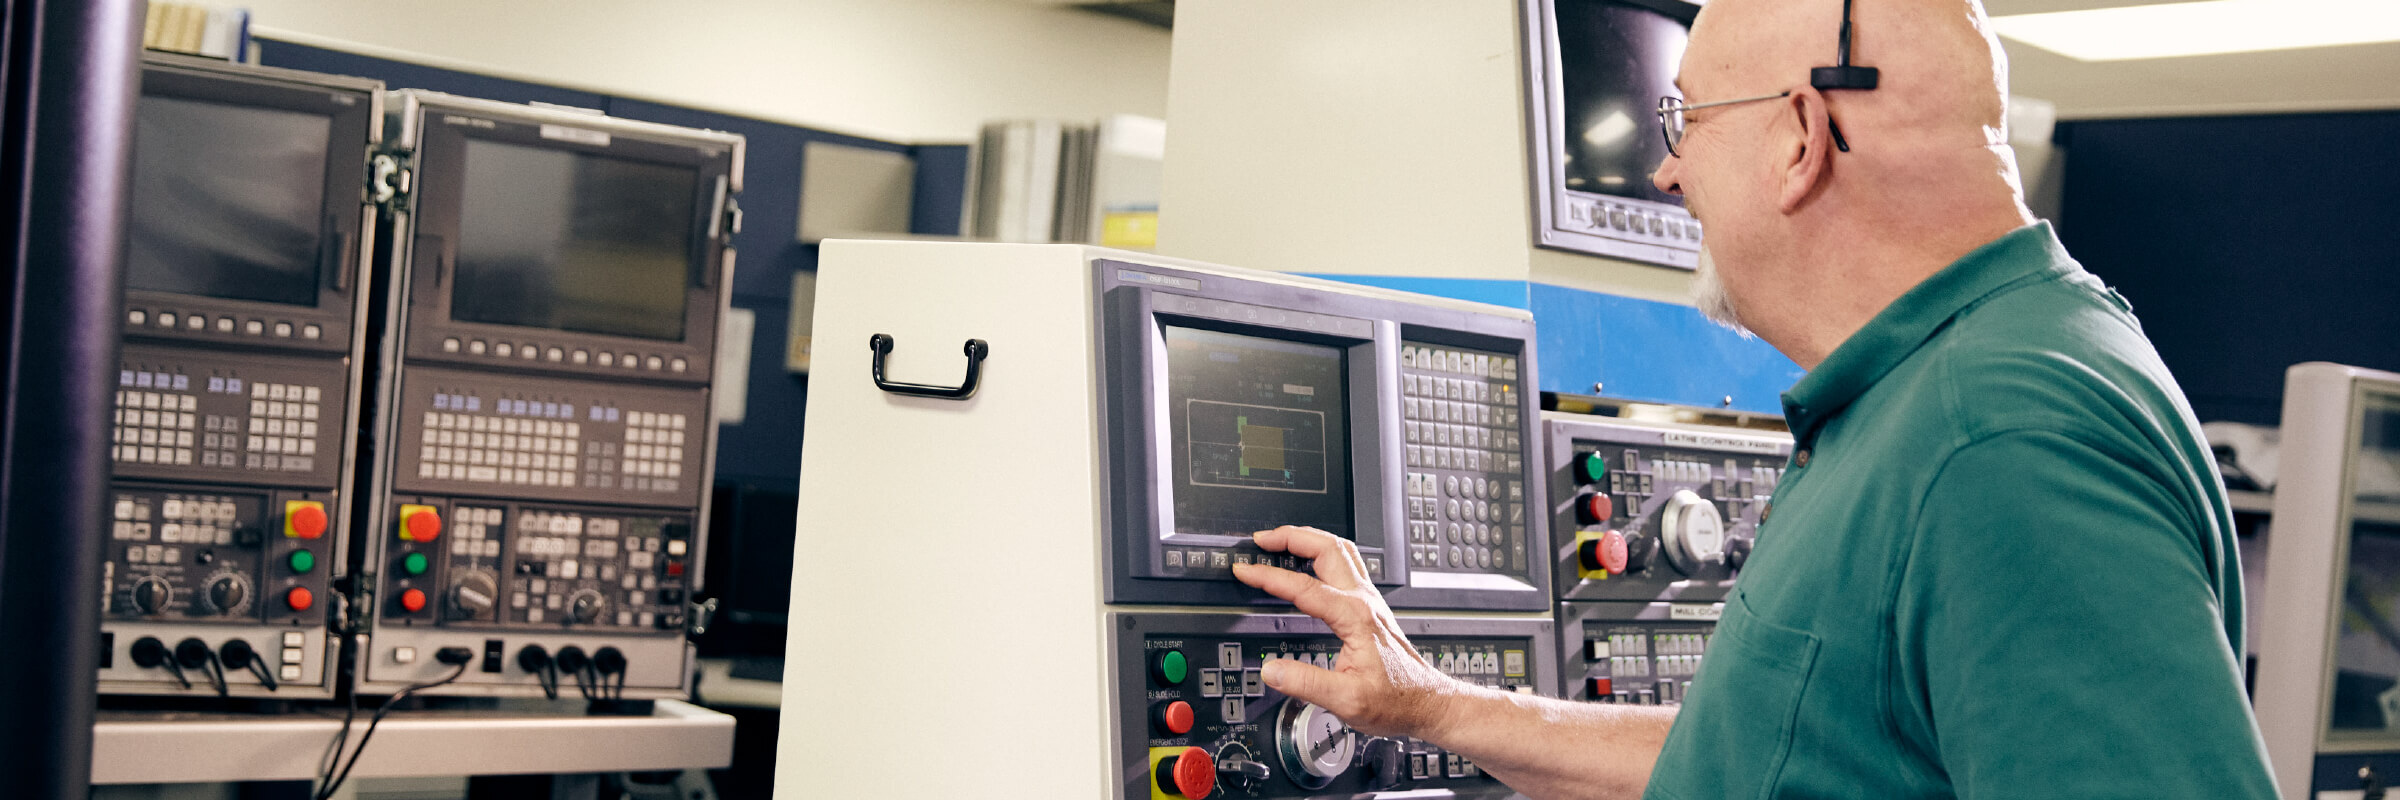 Okuma Constant CARE: Remote CNC Machine Monitoring Provides Speedy Support